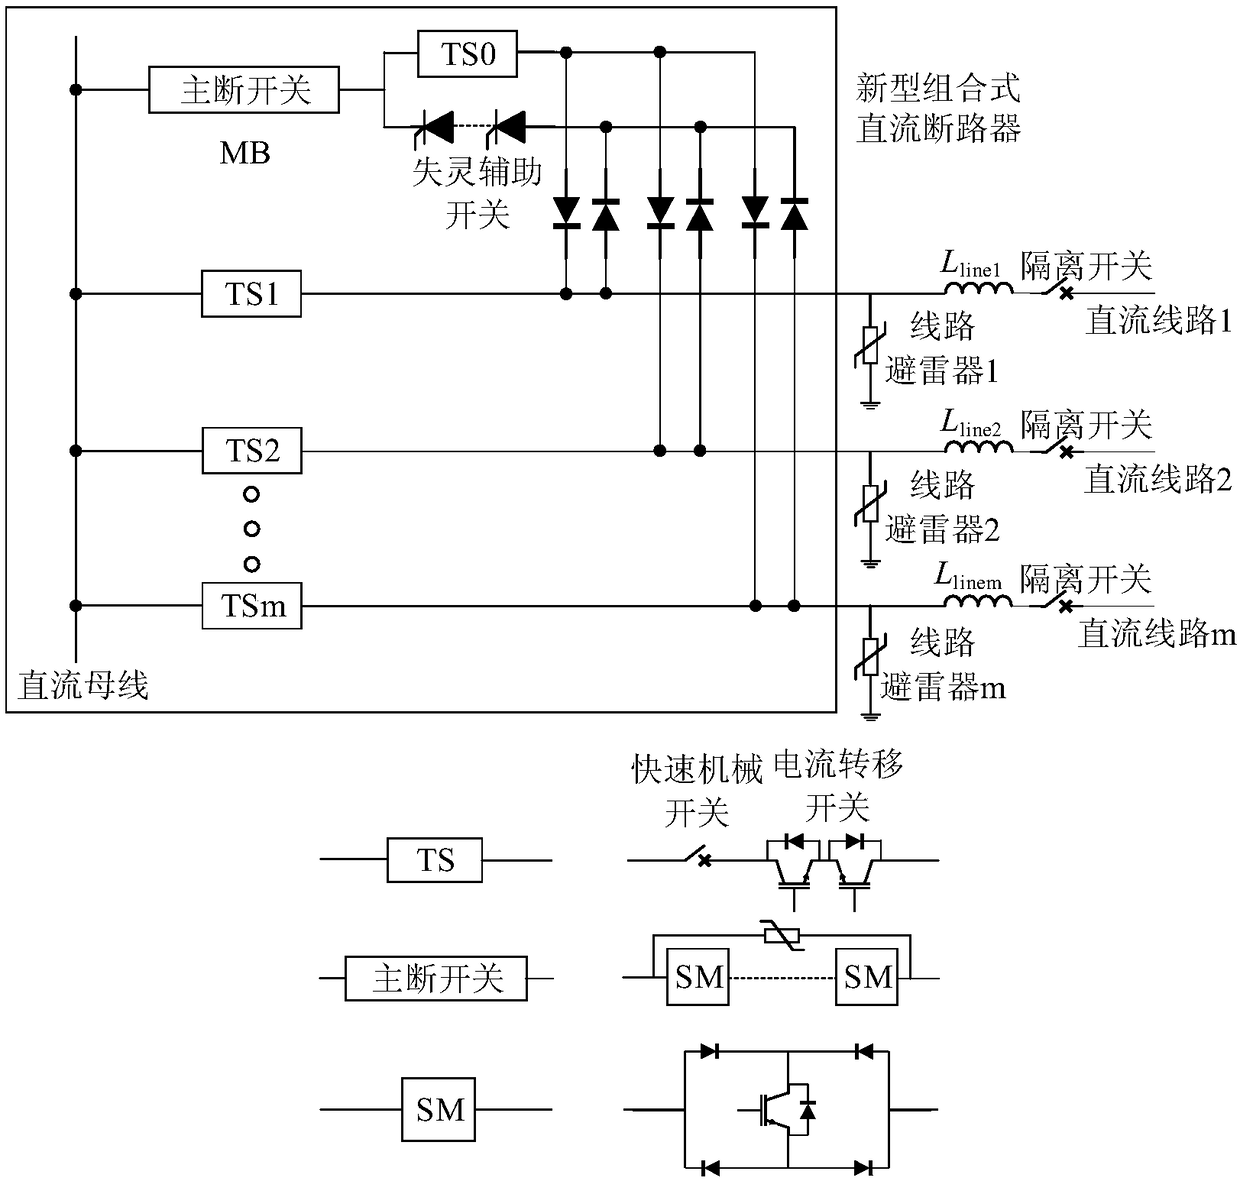 A novel combined DC circuit breaker topology